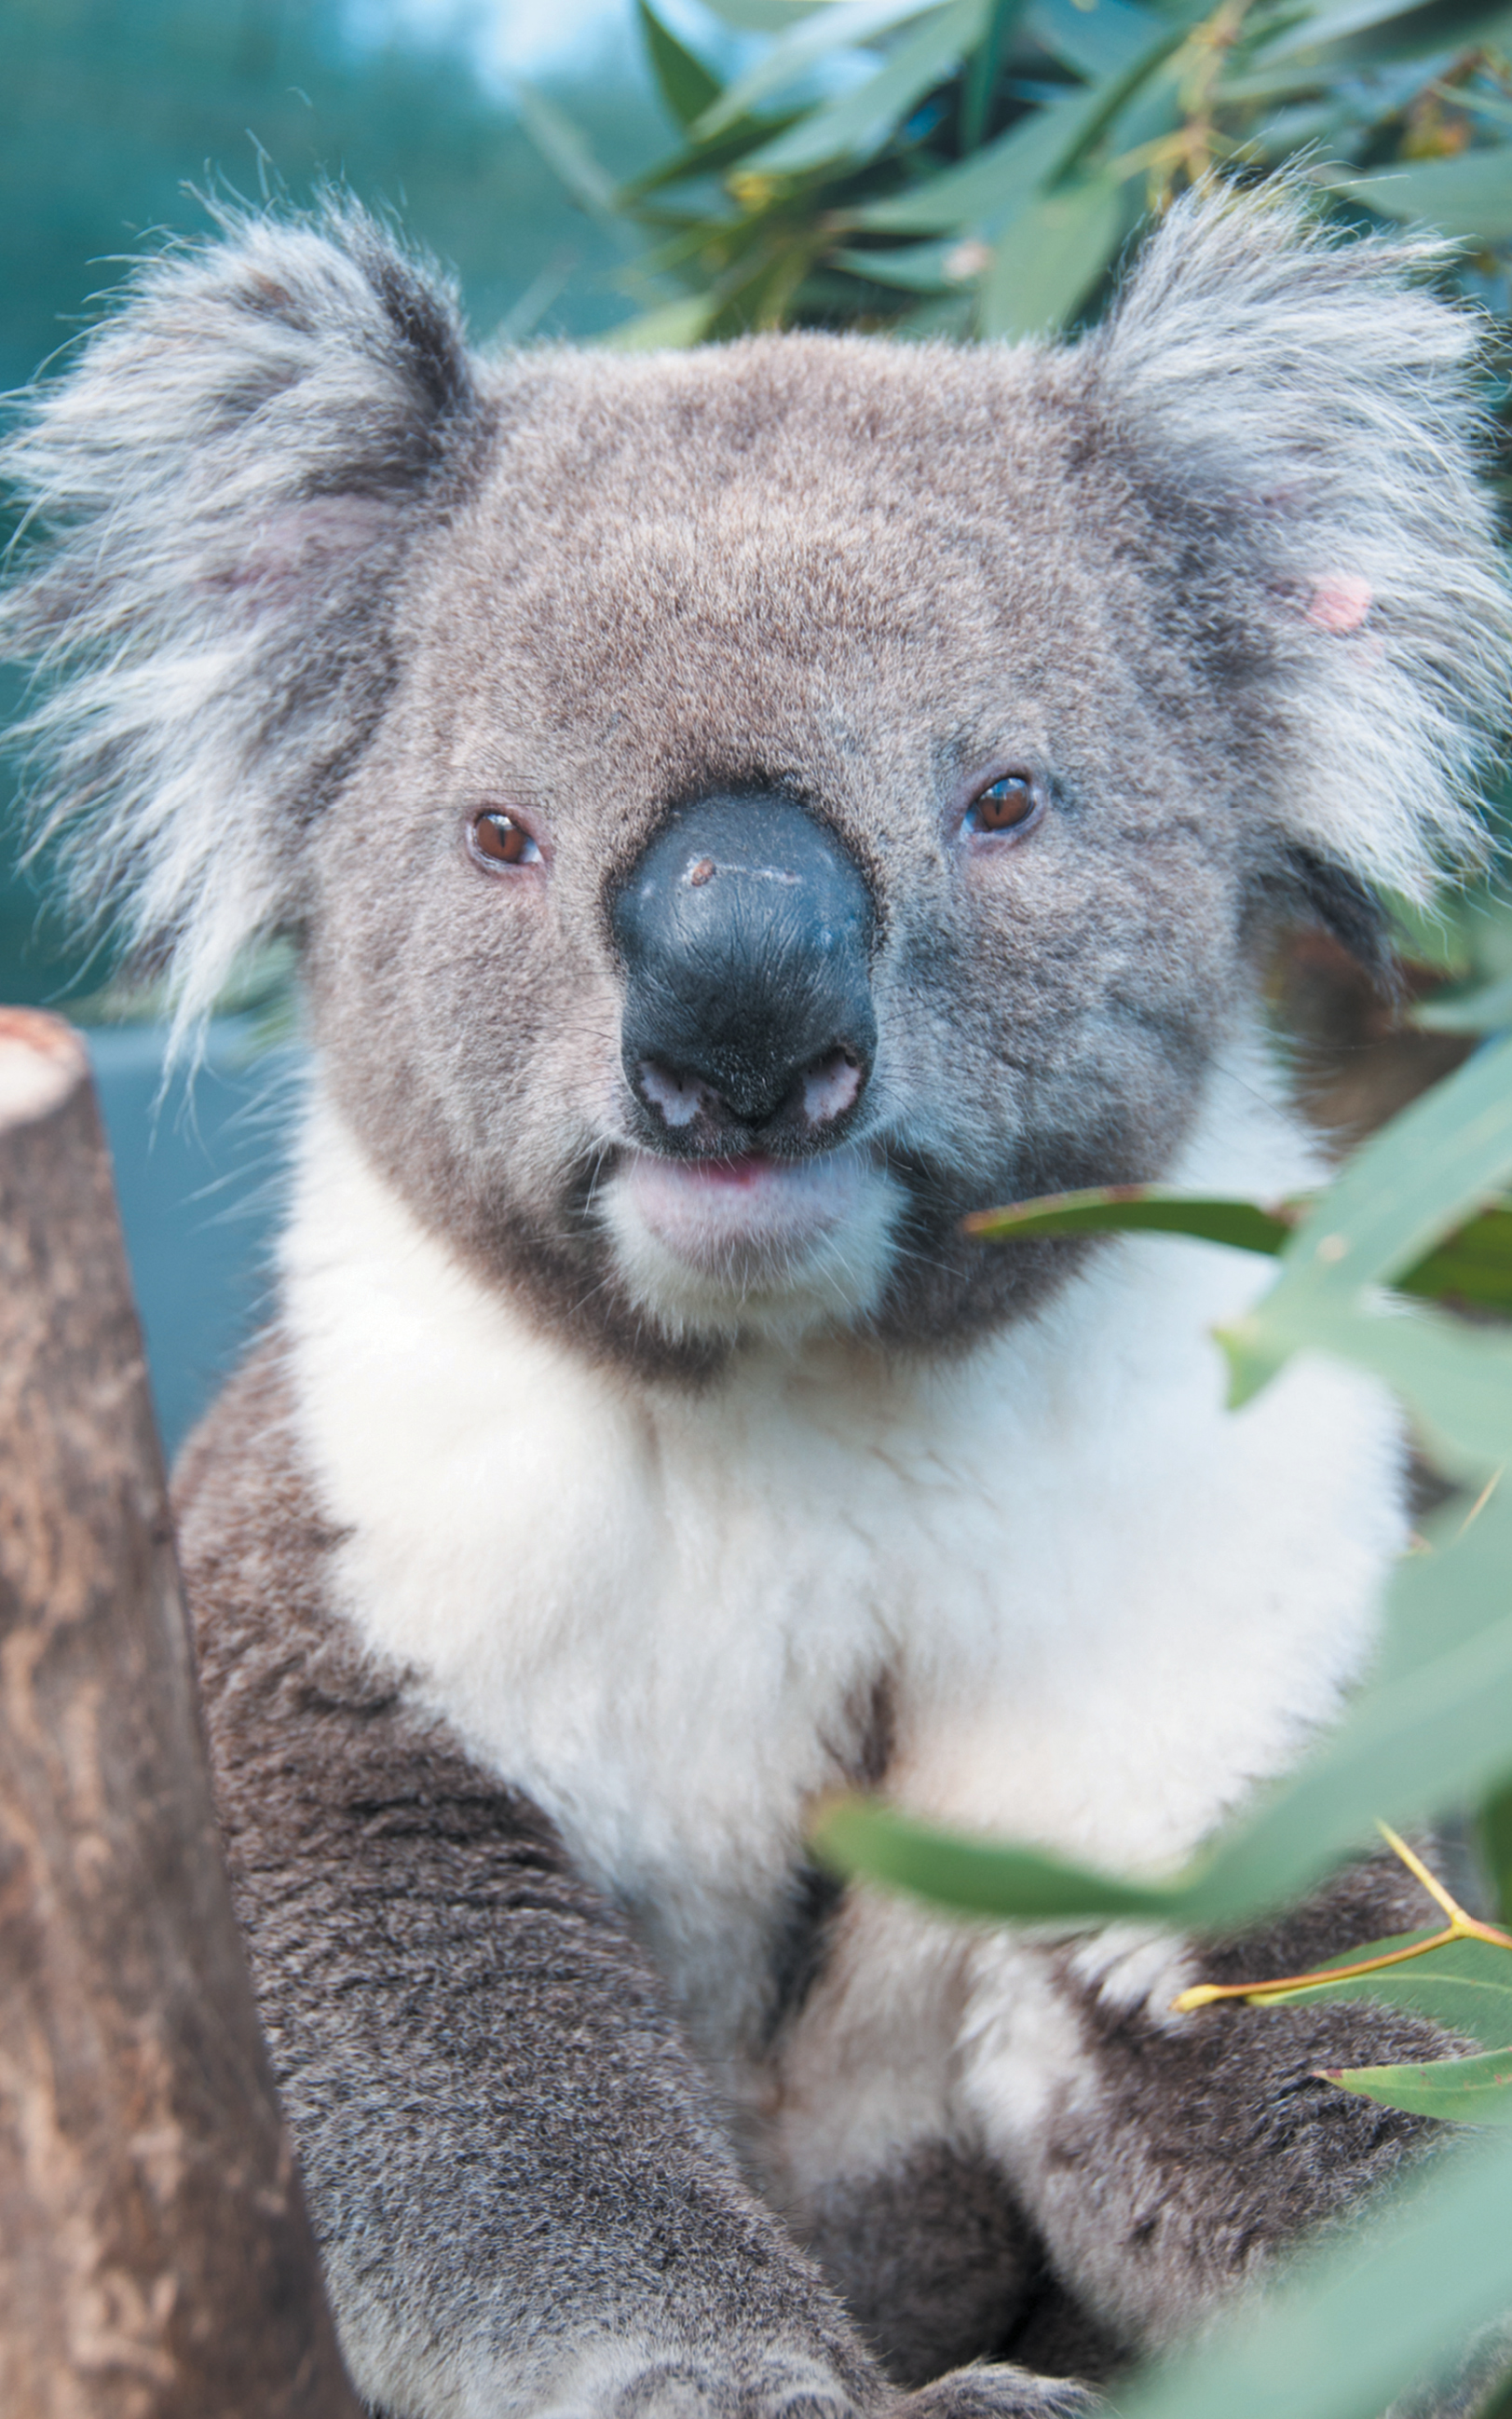 The Koala - Phascolarctos Cinereus